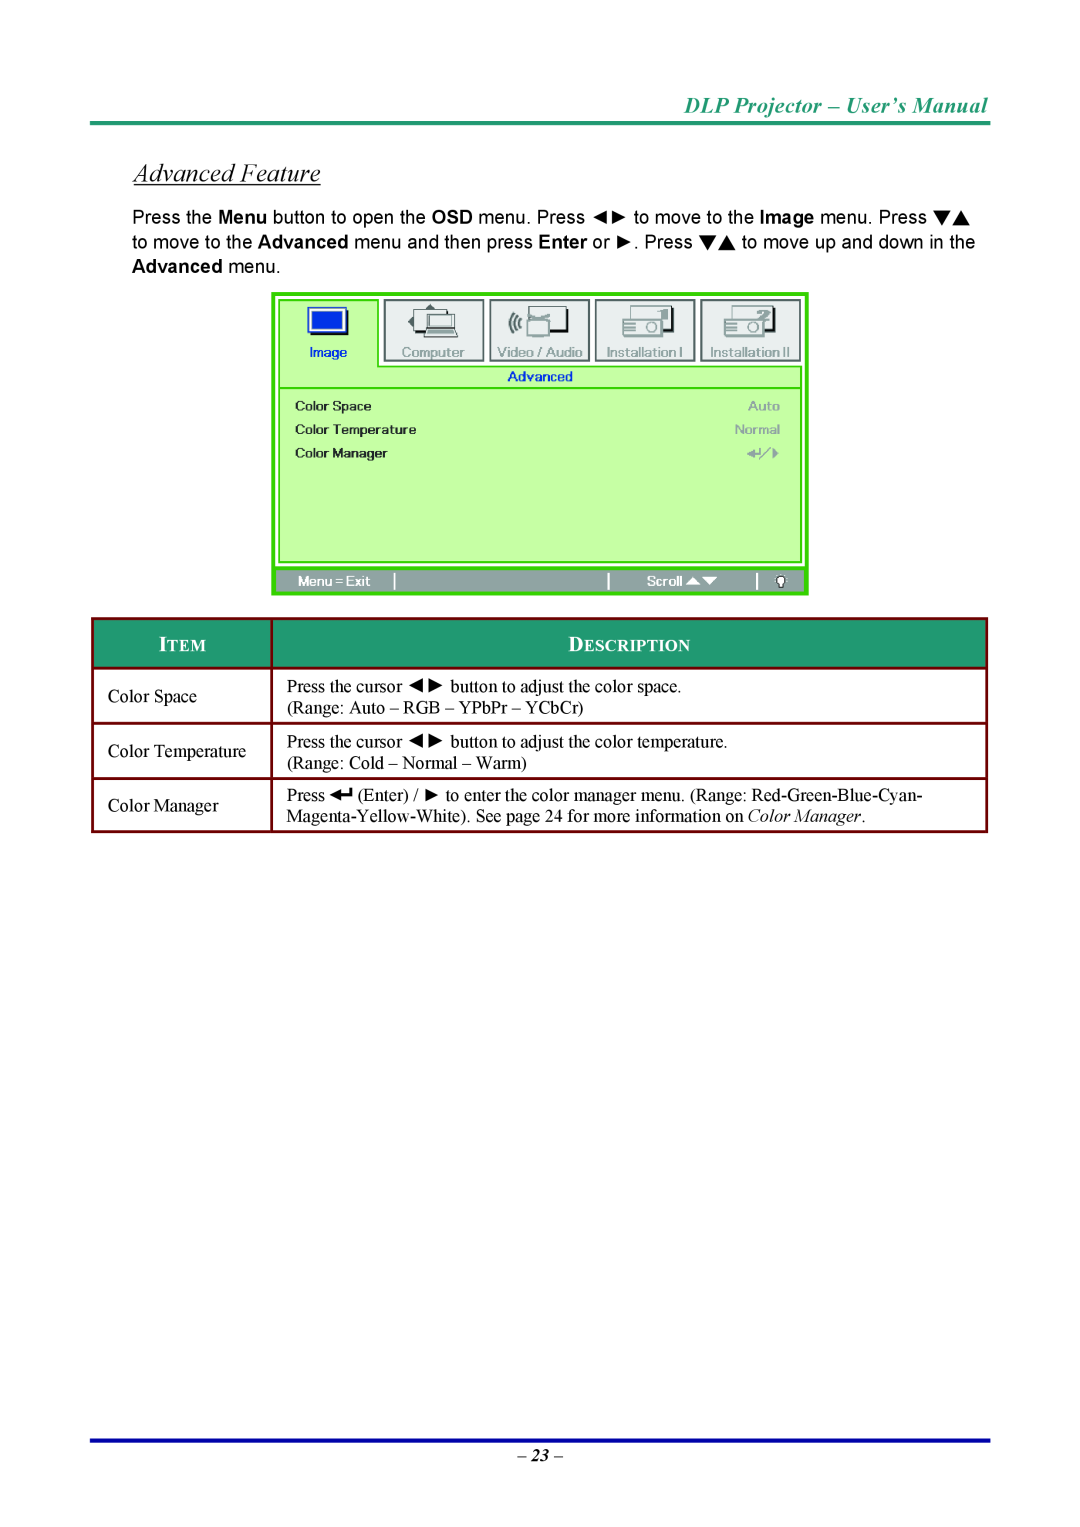 Vivitek D7 user manual Advanced Feature, DLP Projector - User’s Manual, Description 